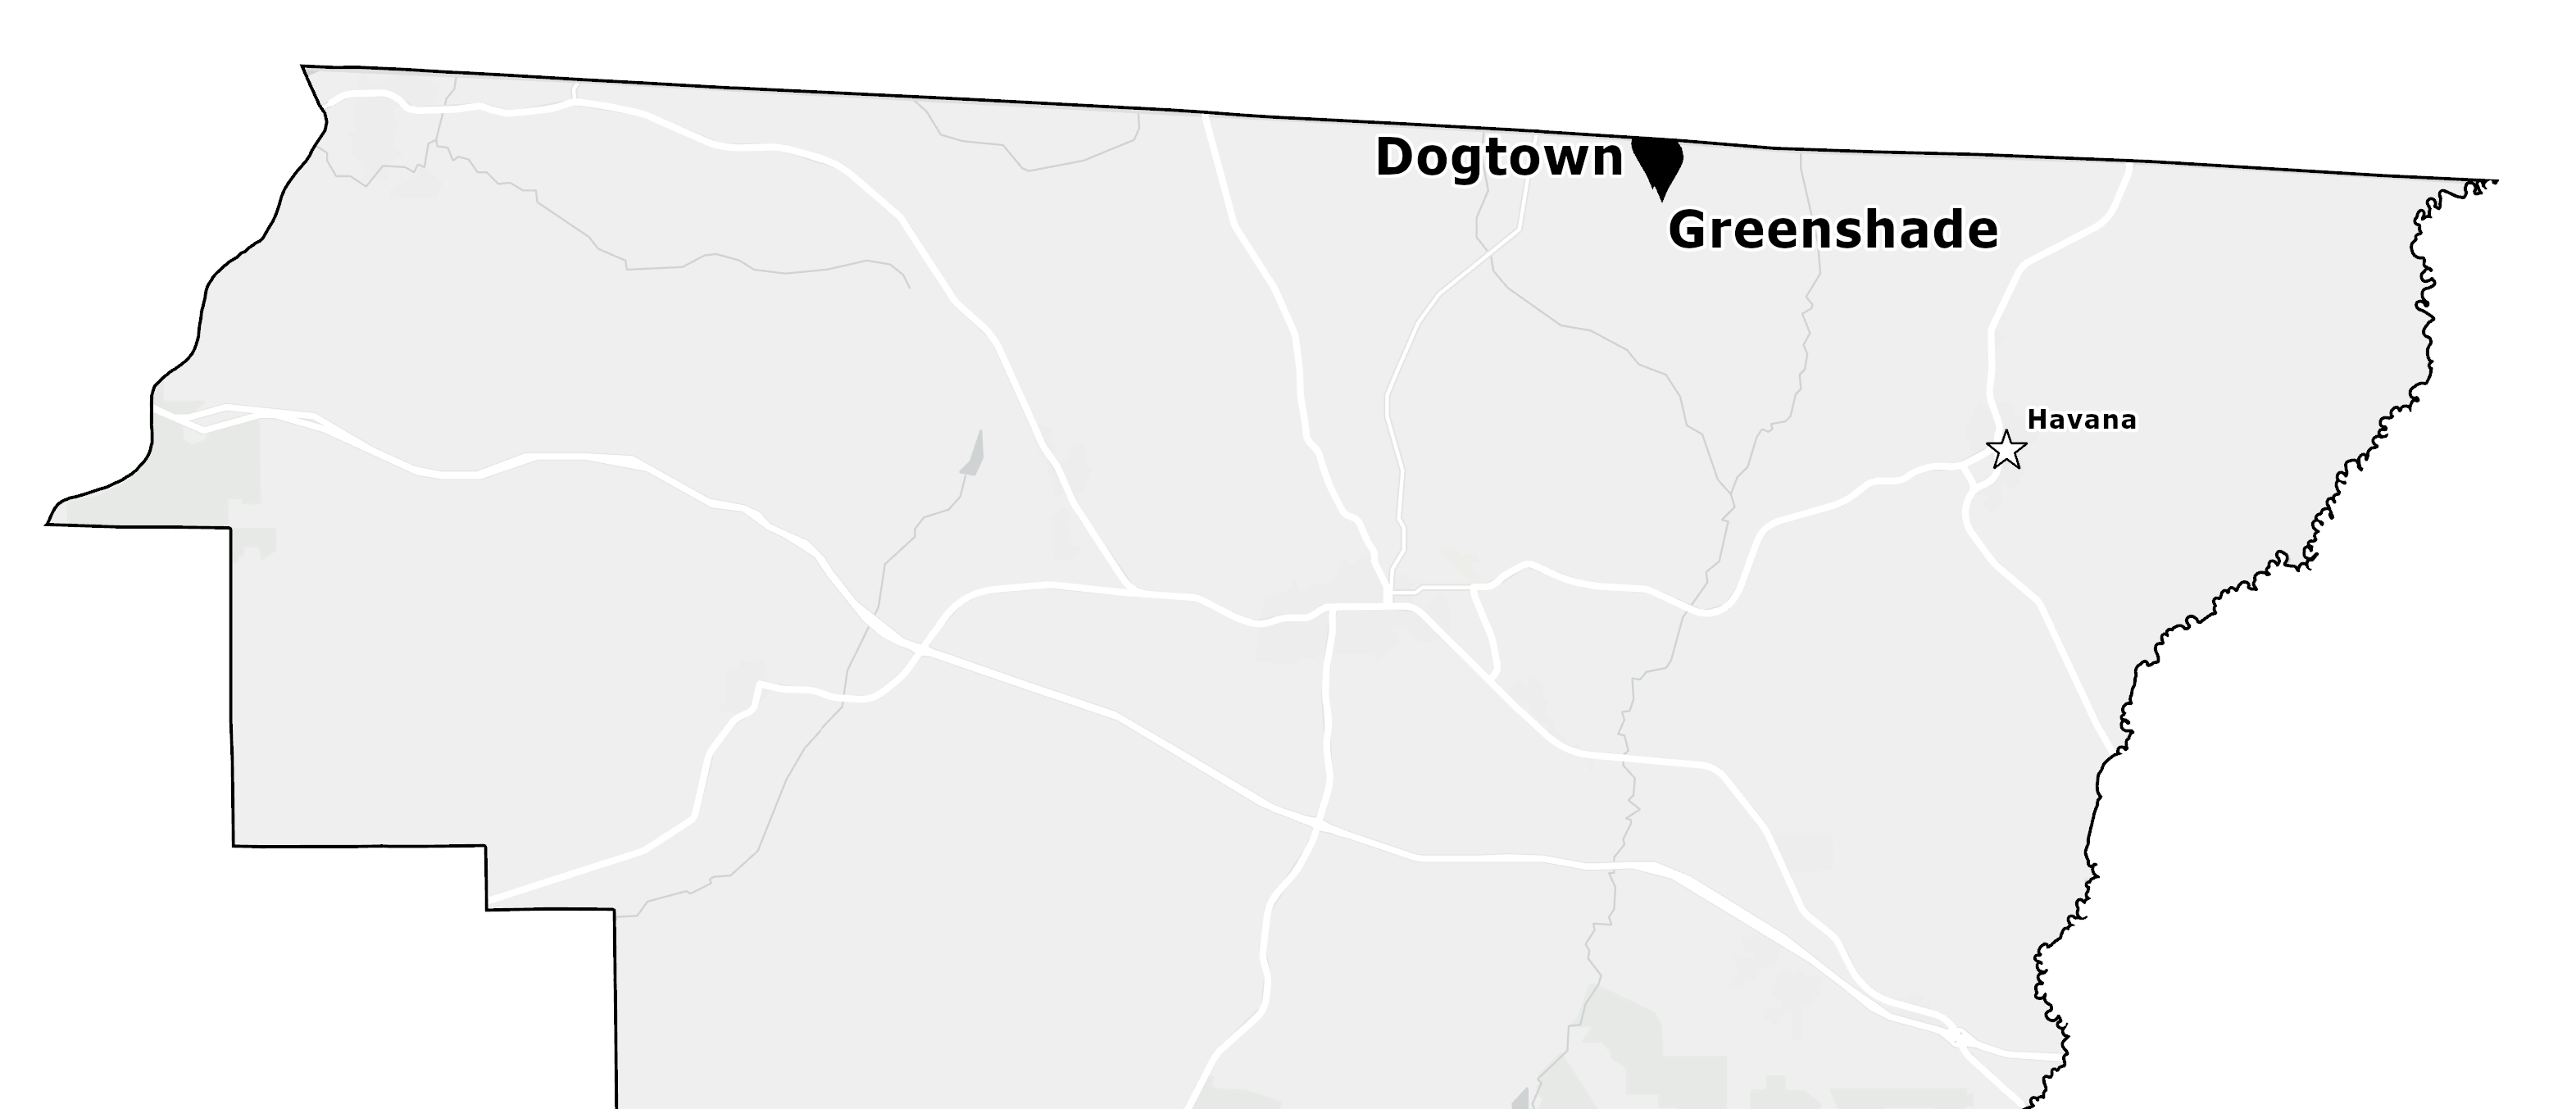 Dogtown & Greenshade